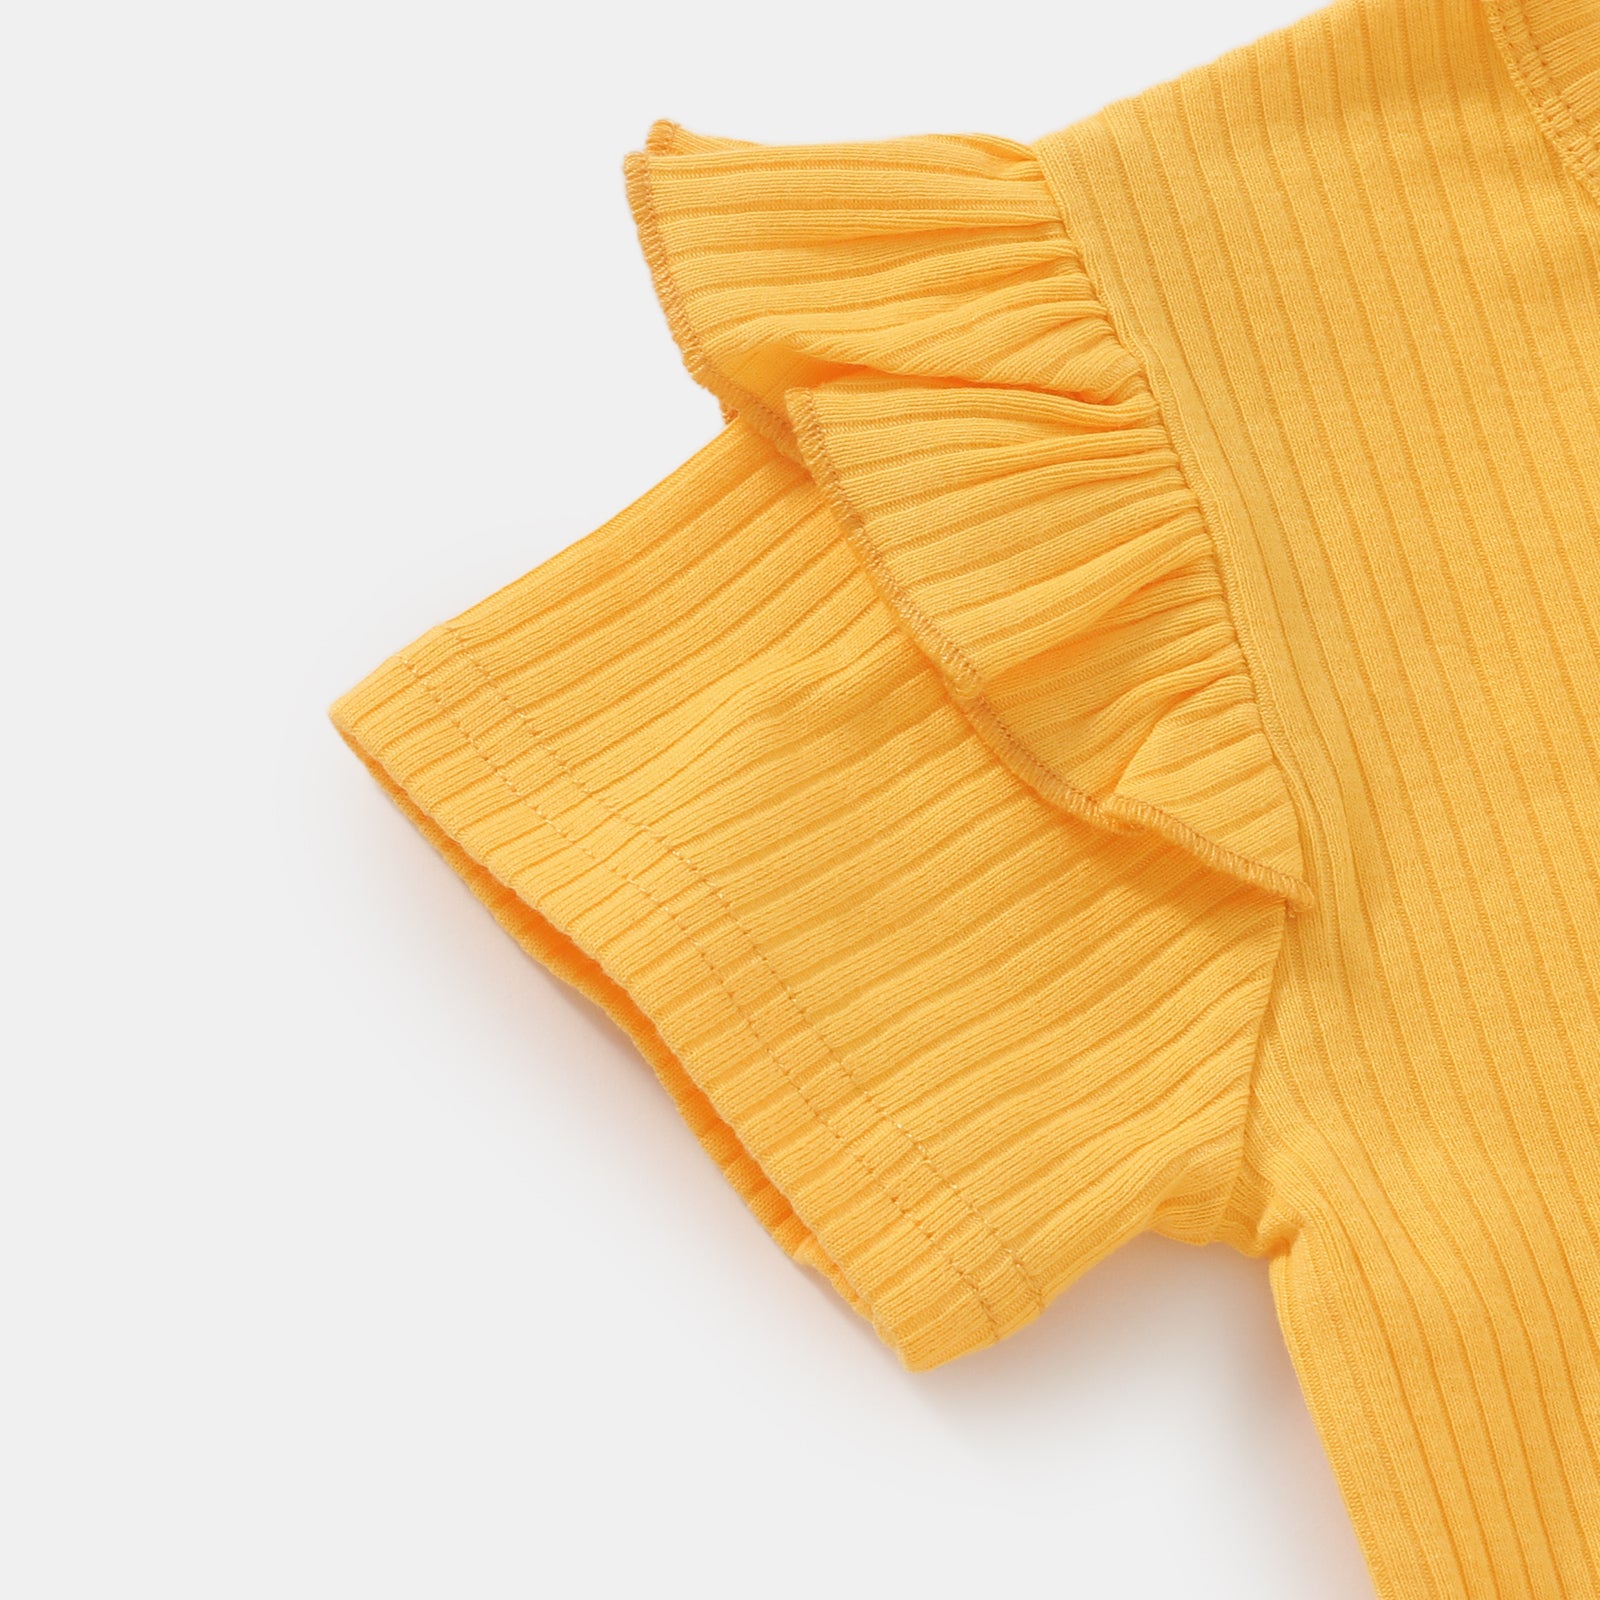 Sunshine Yellow Frill Ribbed Short Sleeve Top